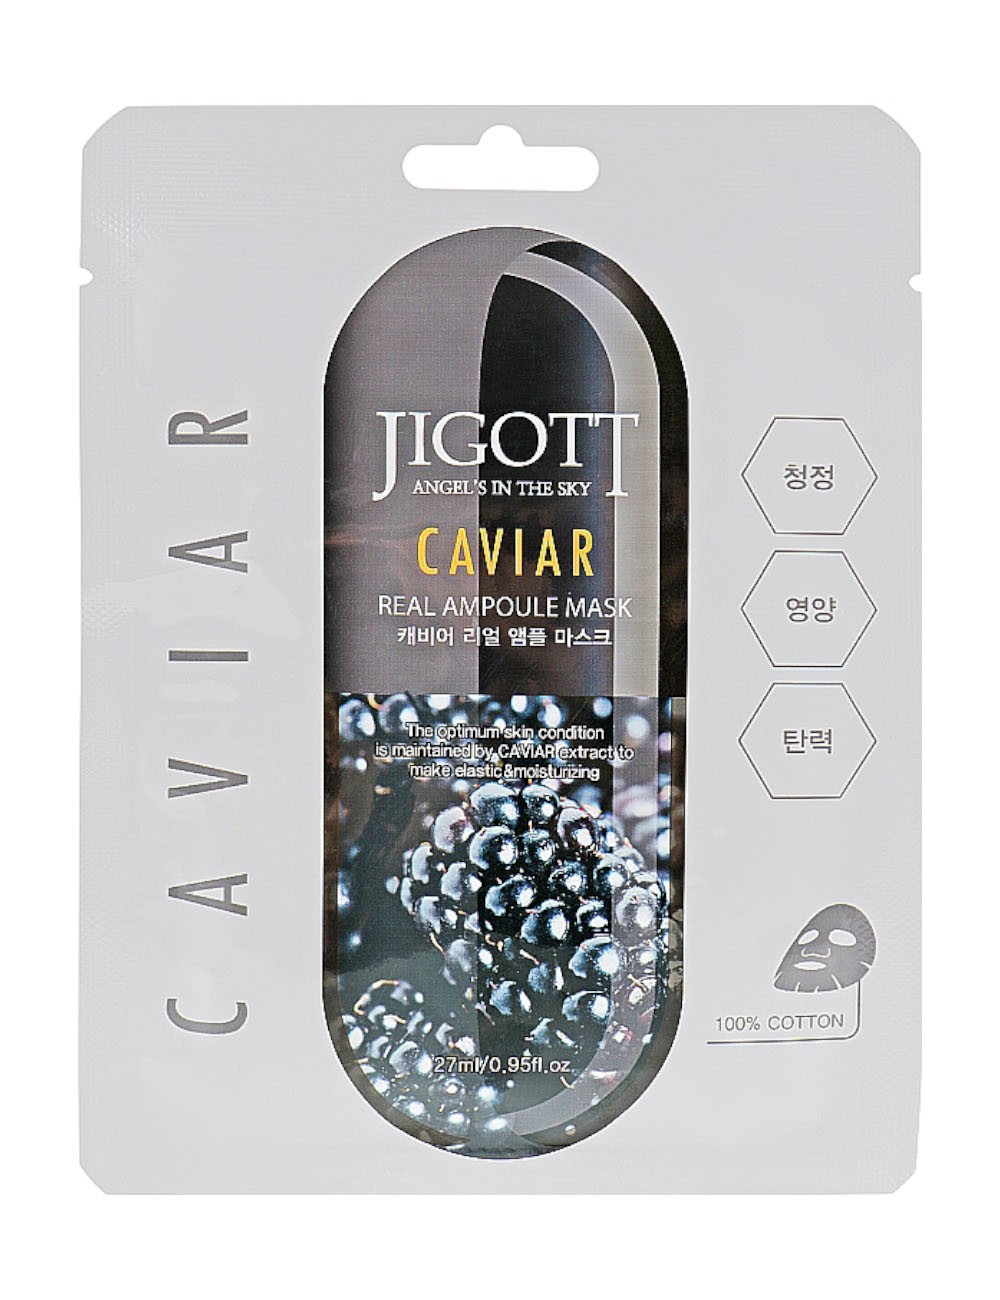 JIGOTT Caviar Real Ampoule Mask